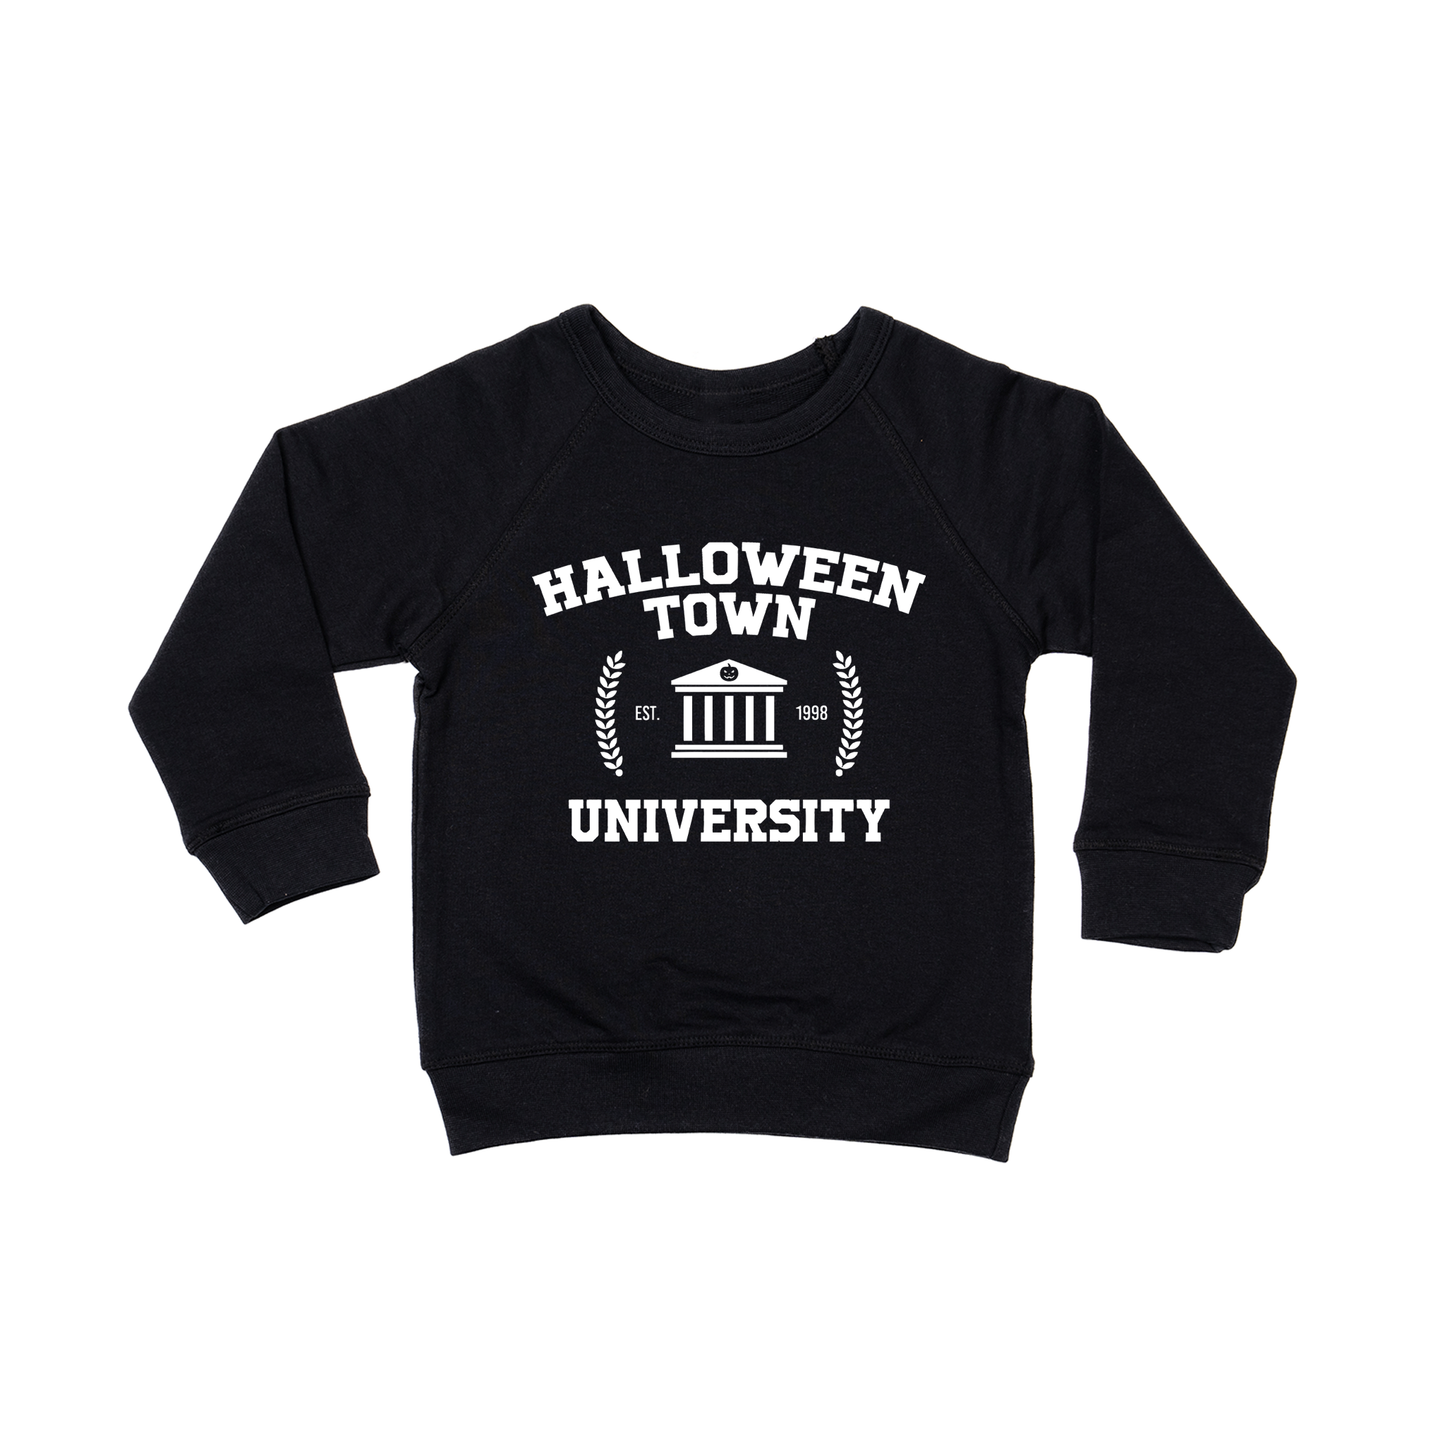 Halloween Town University (White) - Kids Sweatshirt (Black)